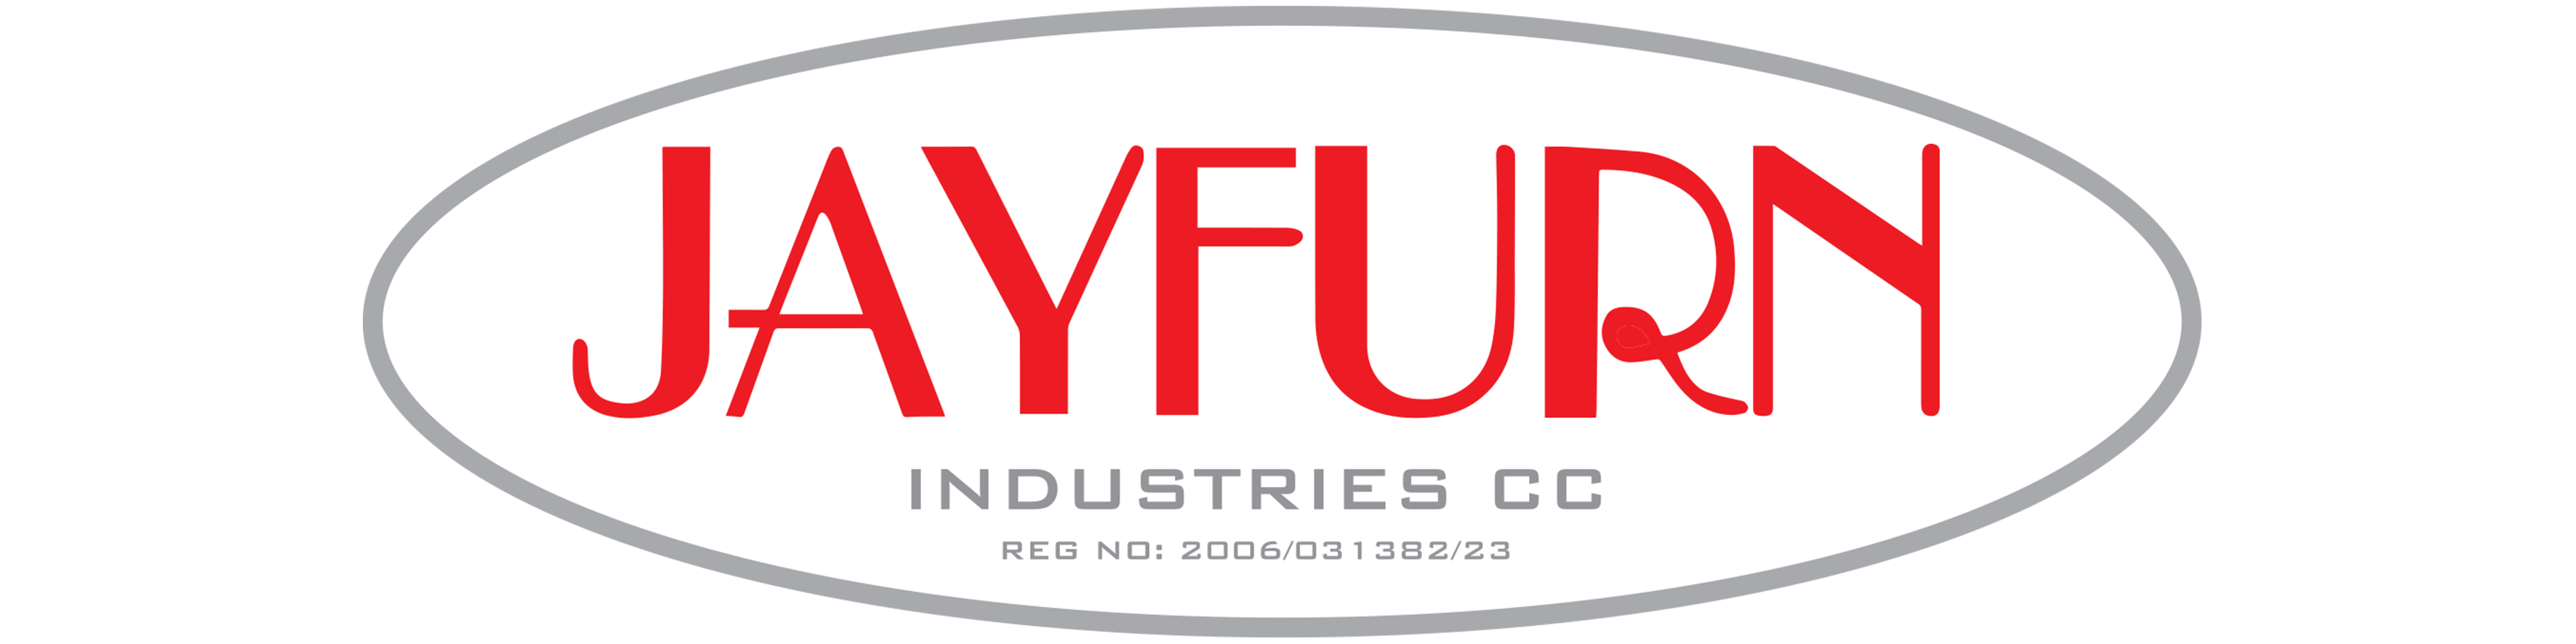 Jayfurn Industries cc